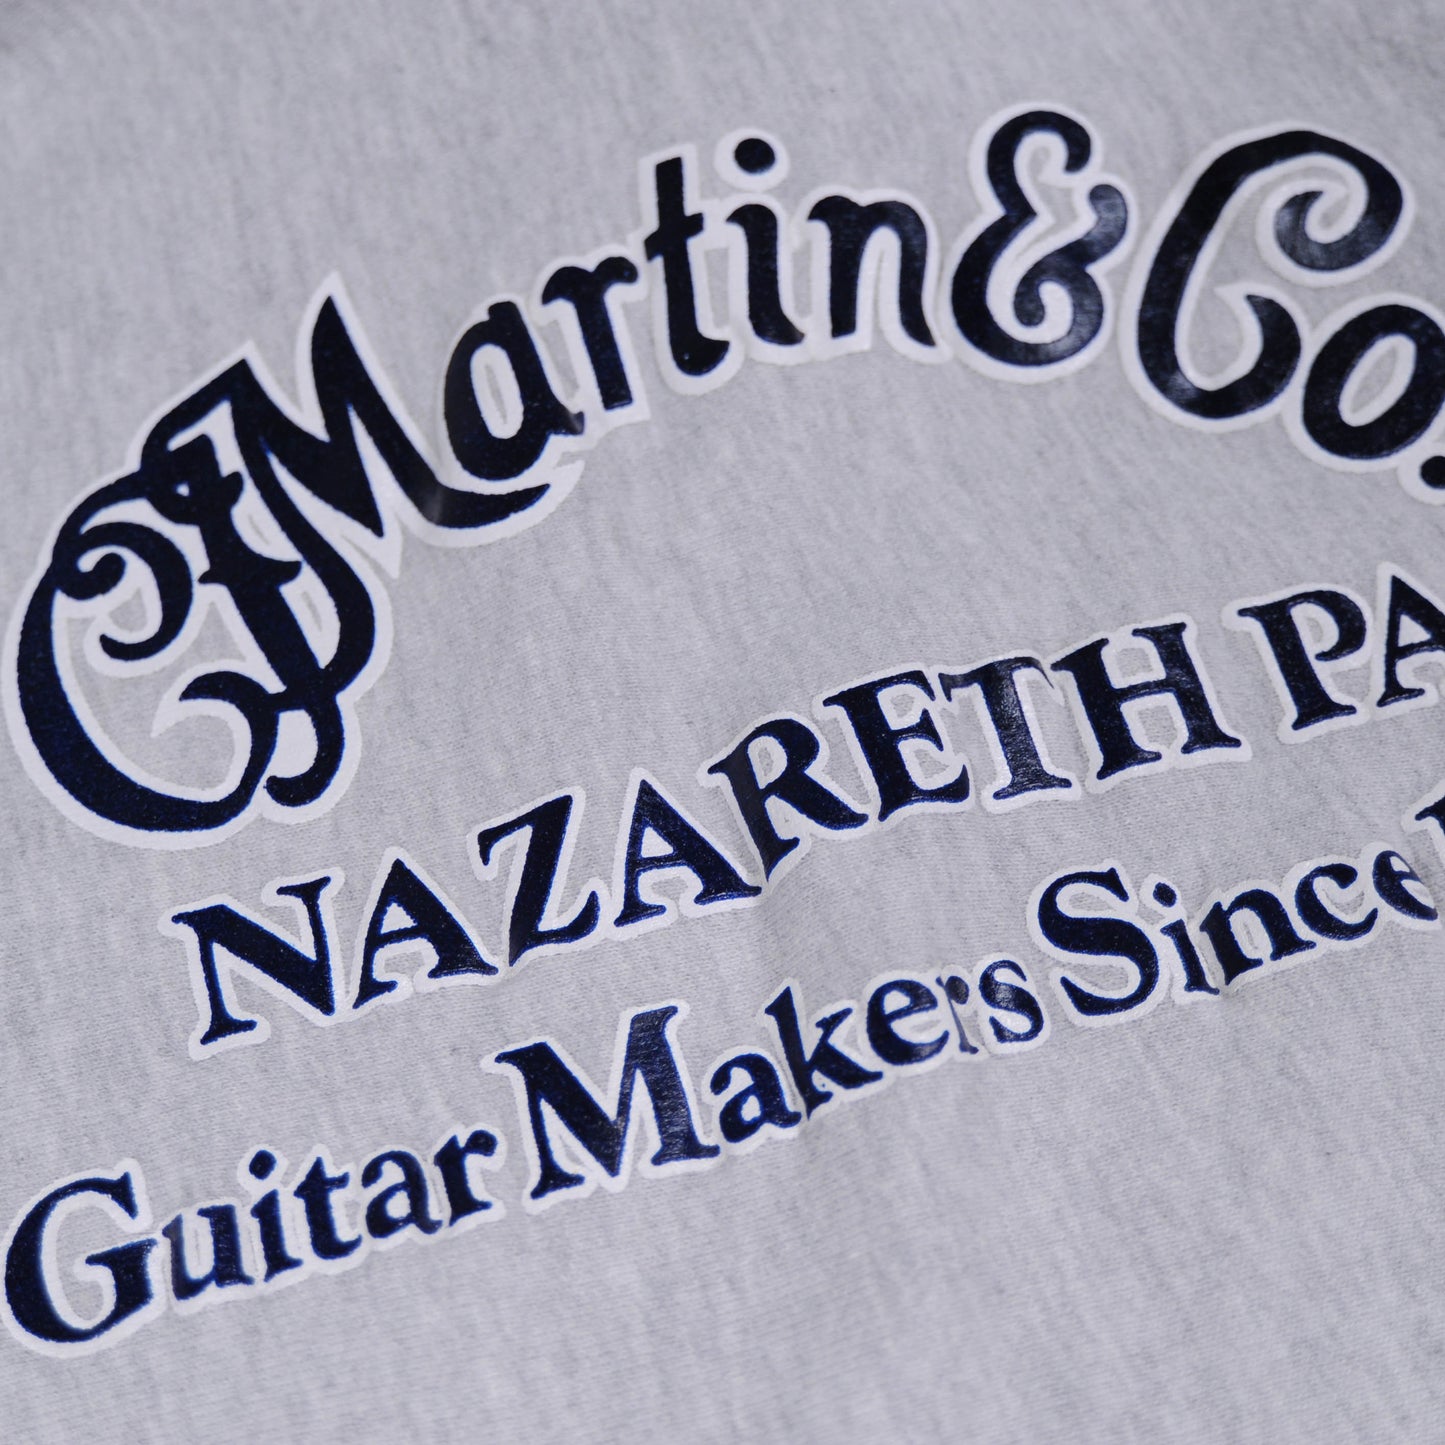 90’s champion REVERSE WEAVE (Martin & co. NAZARETHPA Guitar Makers since 1833) チャンピオンリバースウィーブ (L)/A1431S-O